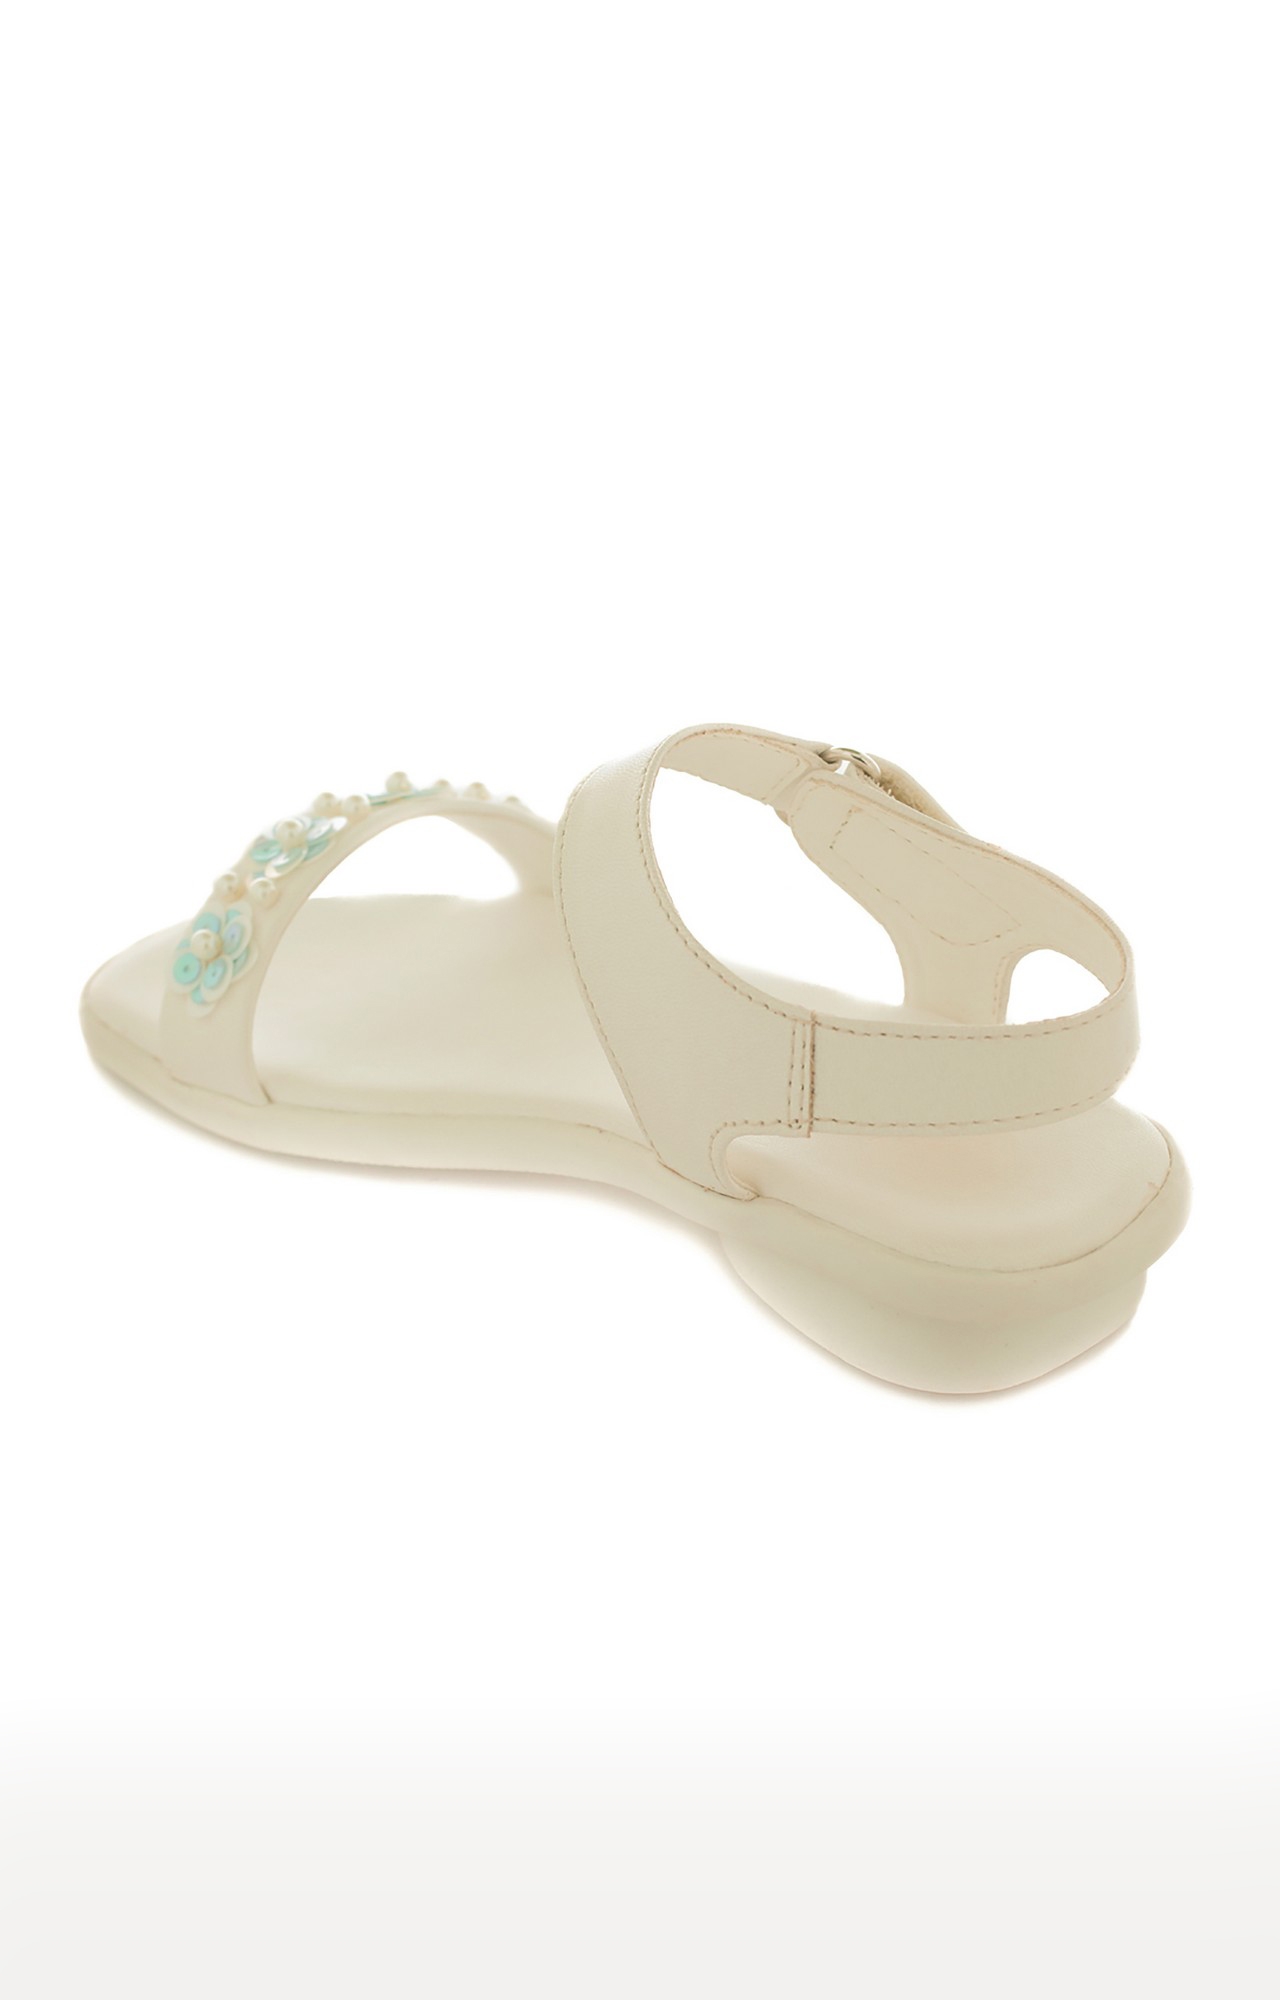 Trends & Trades | Girls White Velcro Sandals 2